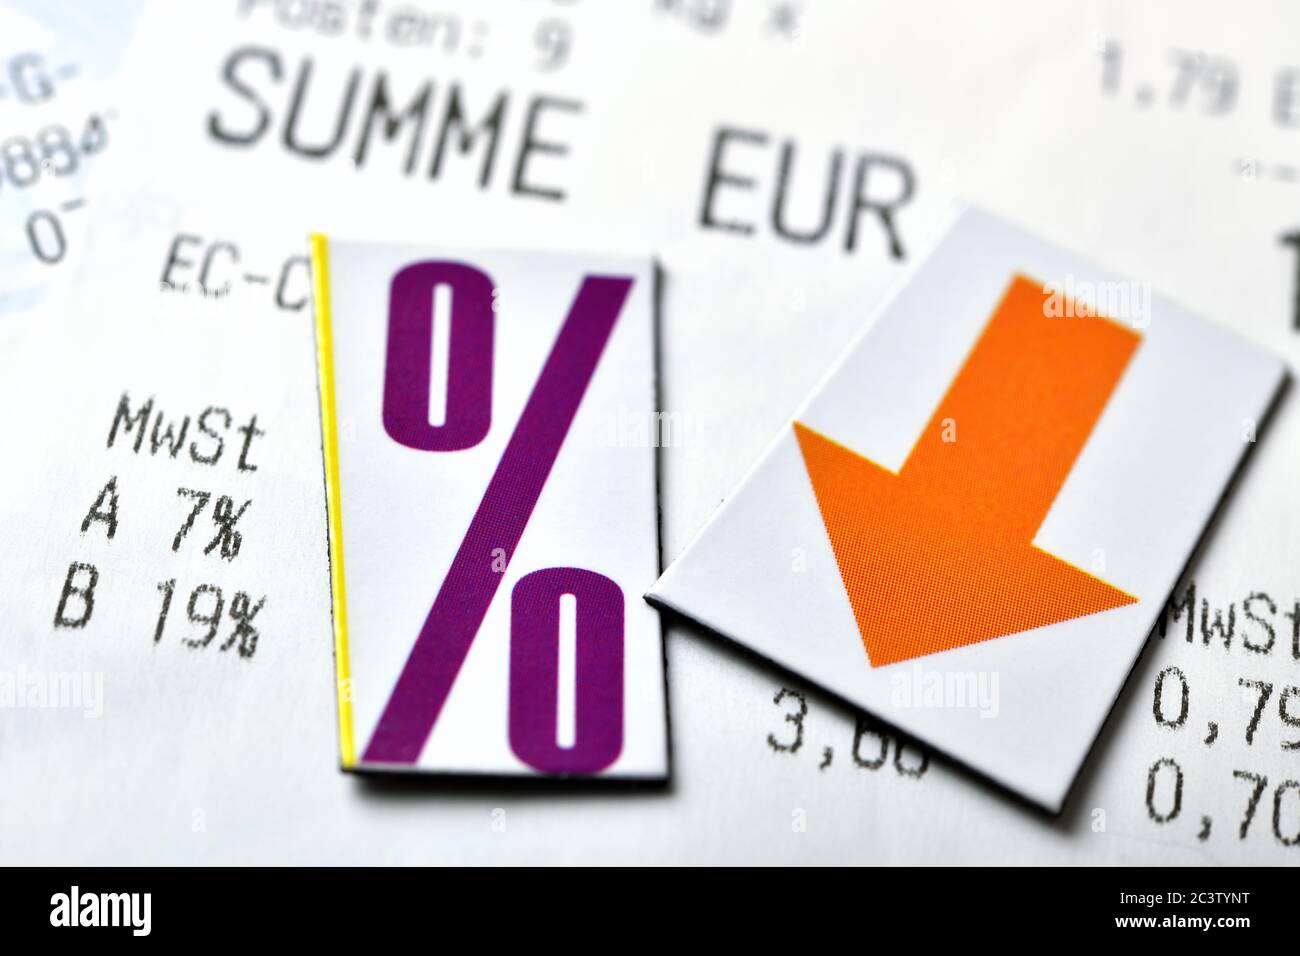 Percent sign and downward pointing arrow on receipts, symbol photo for VAT cut to stimulate the economy, Prozentzeichen und abwärts gerichteter Pfeil Stock Photo